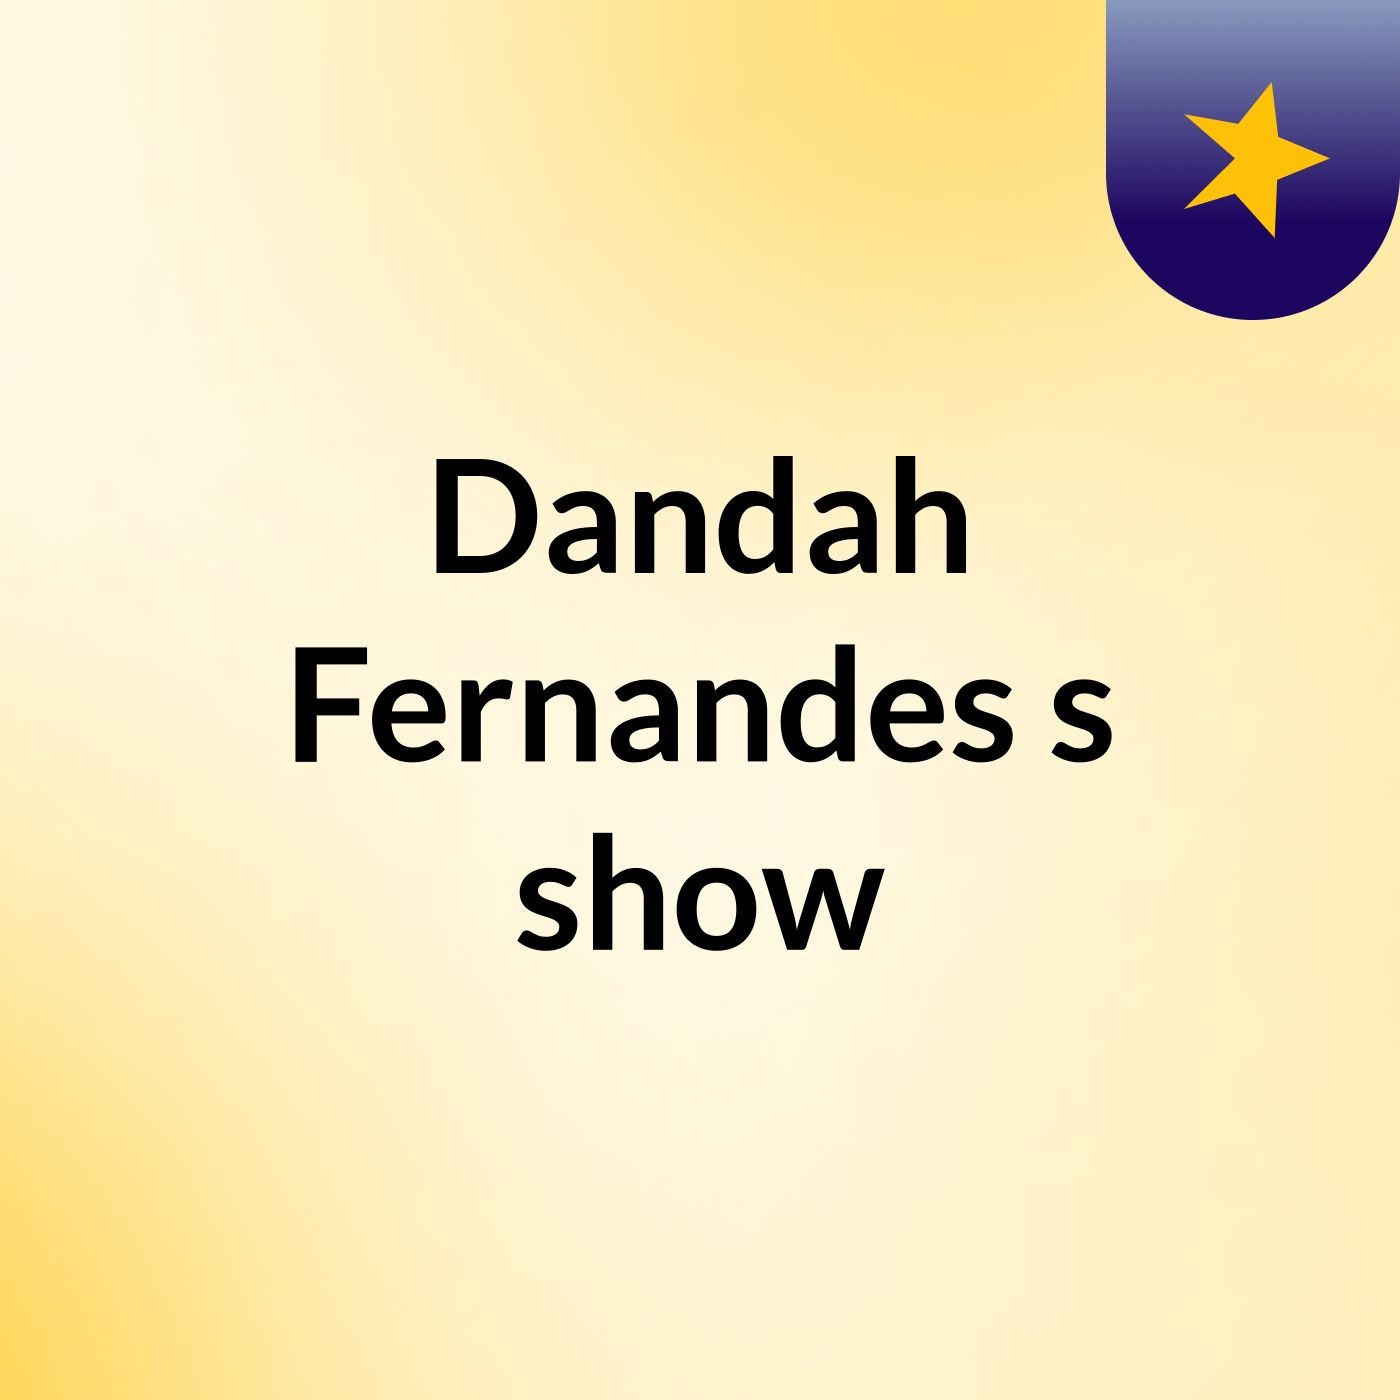 Dandah Fernandes's show